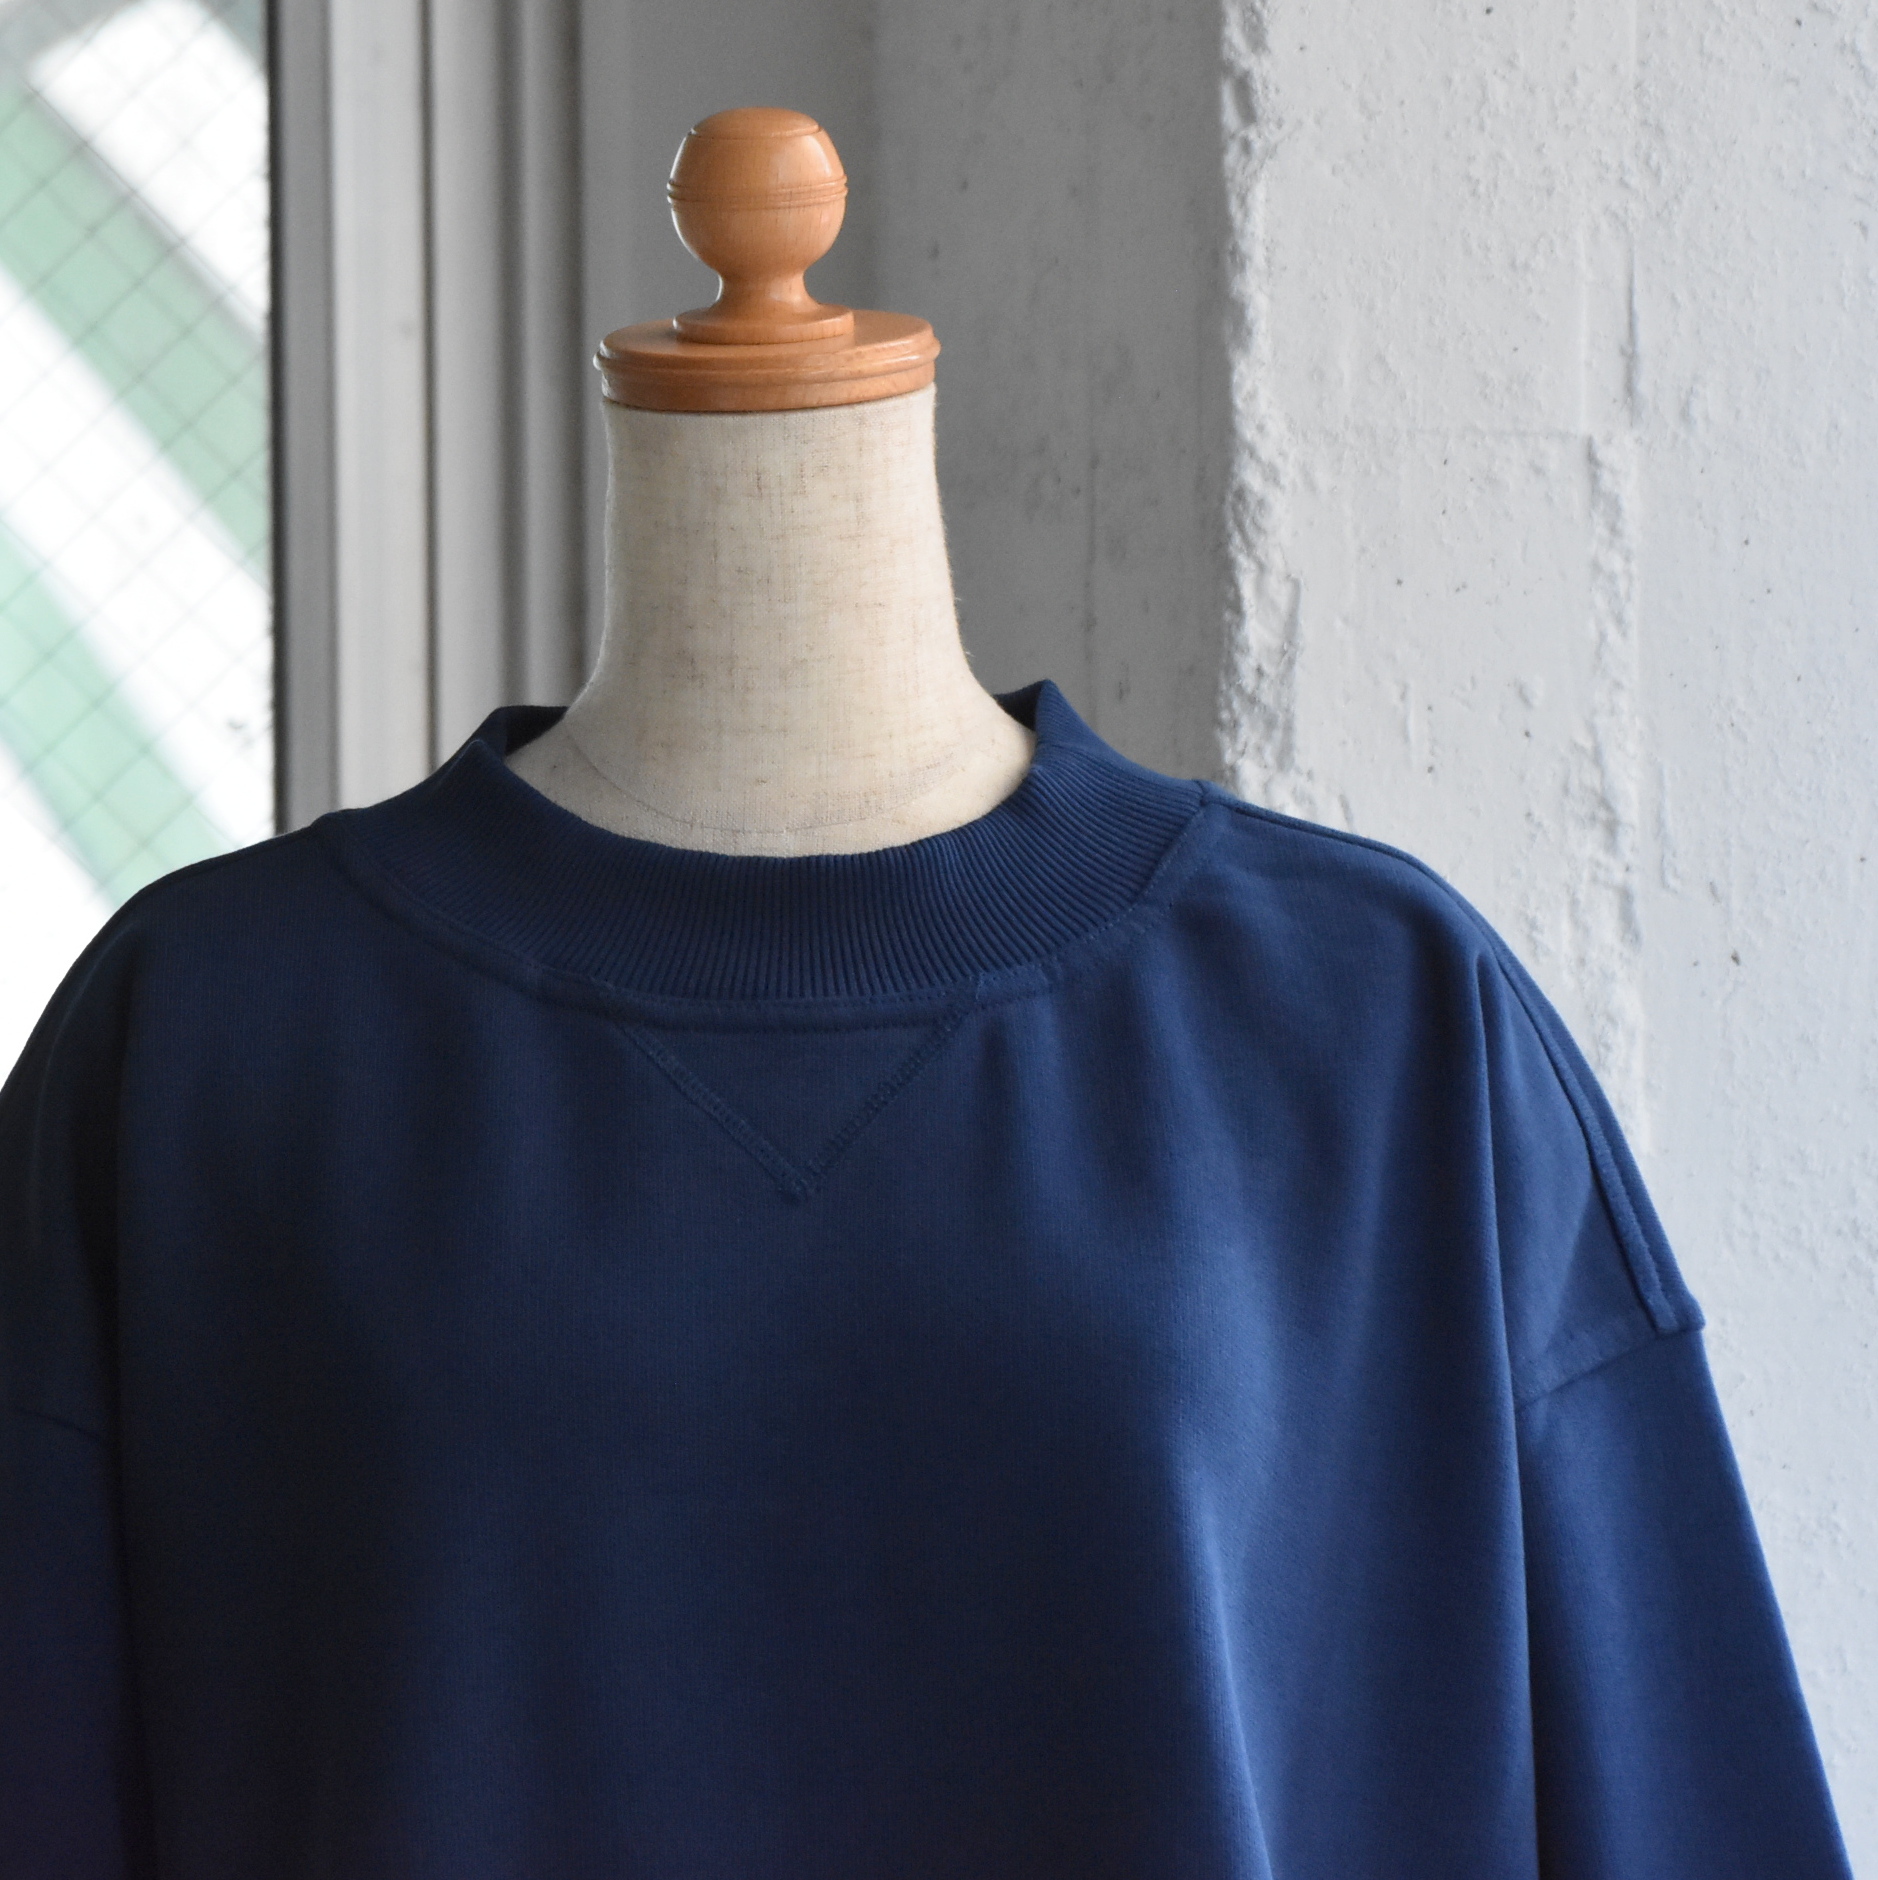 y40% off salezSOFIE D'HOORE(\tB[h[) / Long sleeve C-neck sweatshirt with top stichy2FWJz #TASTE-AA(9)